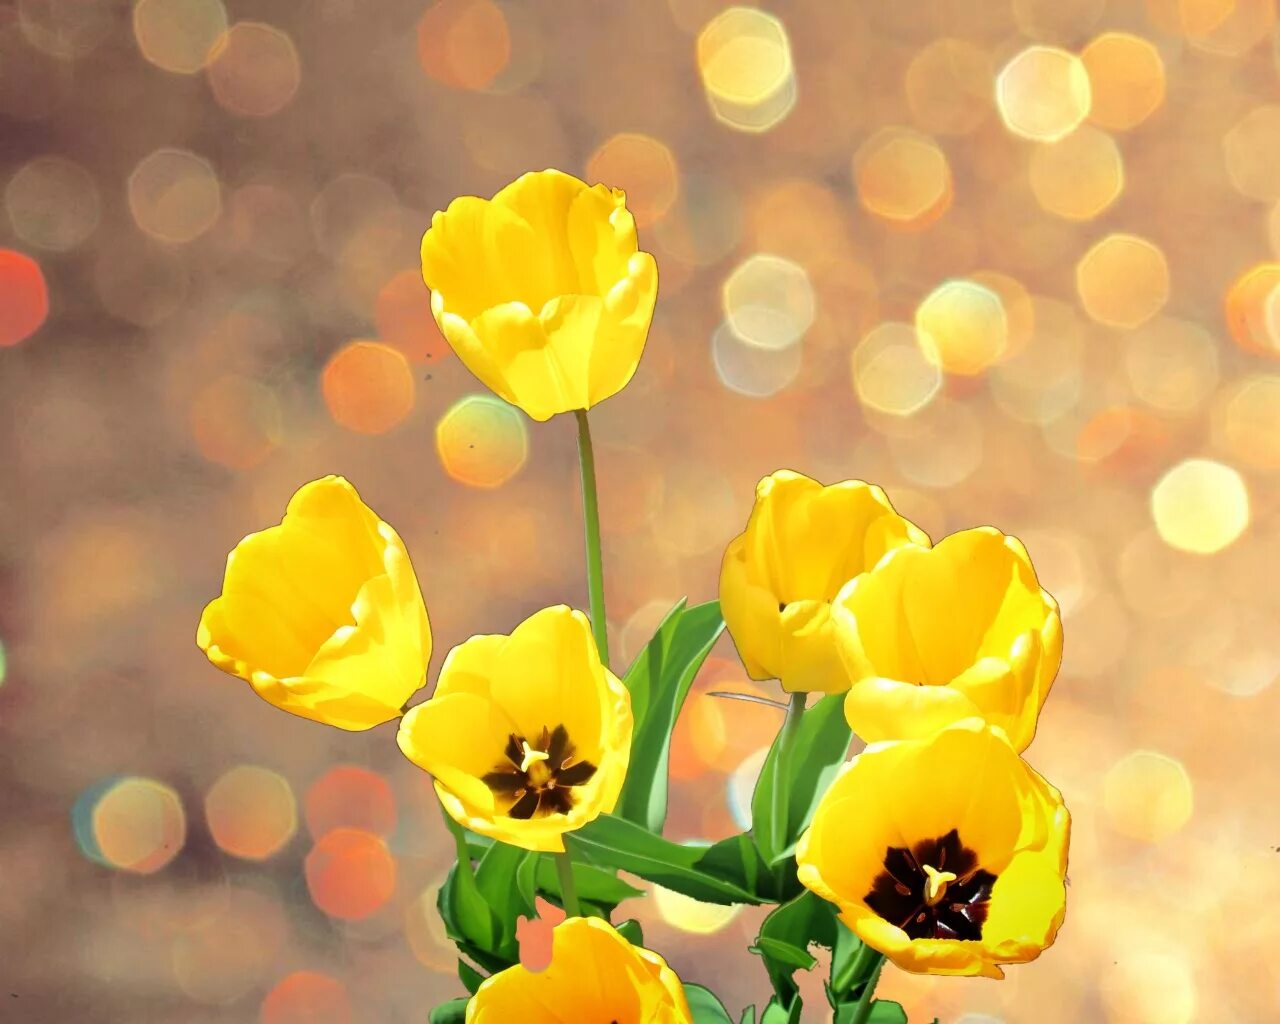 Желтые тюльпаны. Желтый тюльпан серединка. Желтые тюльпаны внутри. Тычинки желтого тюльпана. Что означает желтый тюльпан на языке цветов